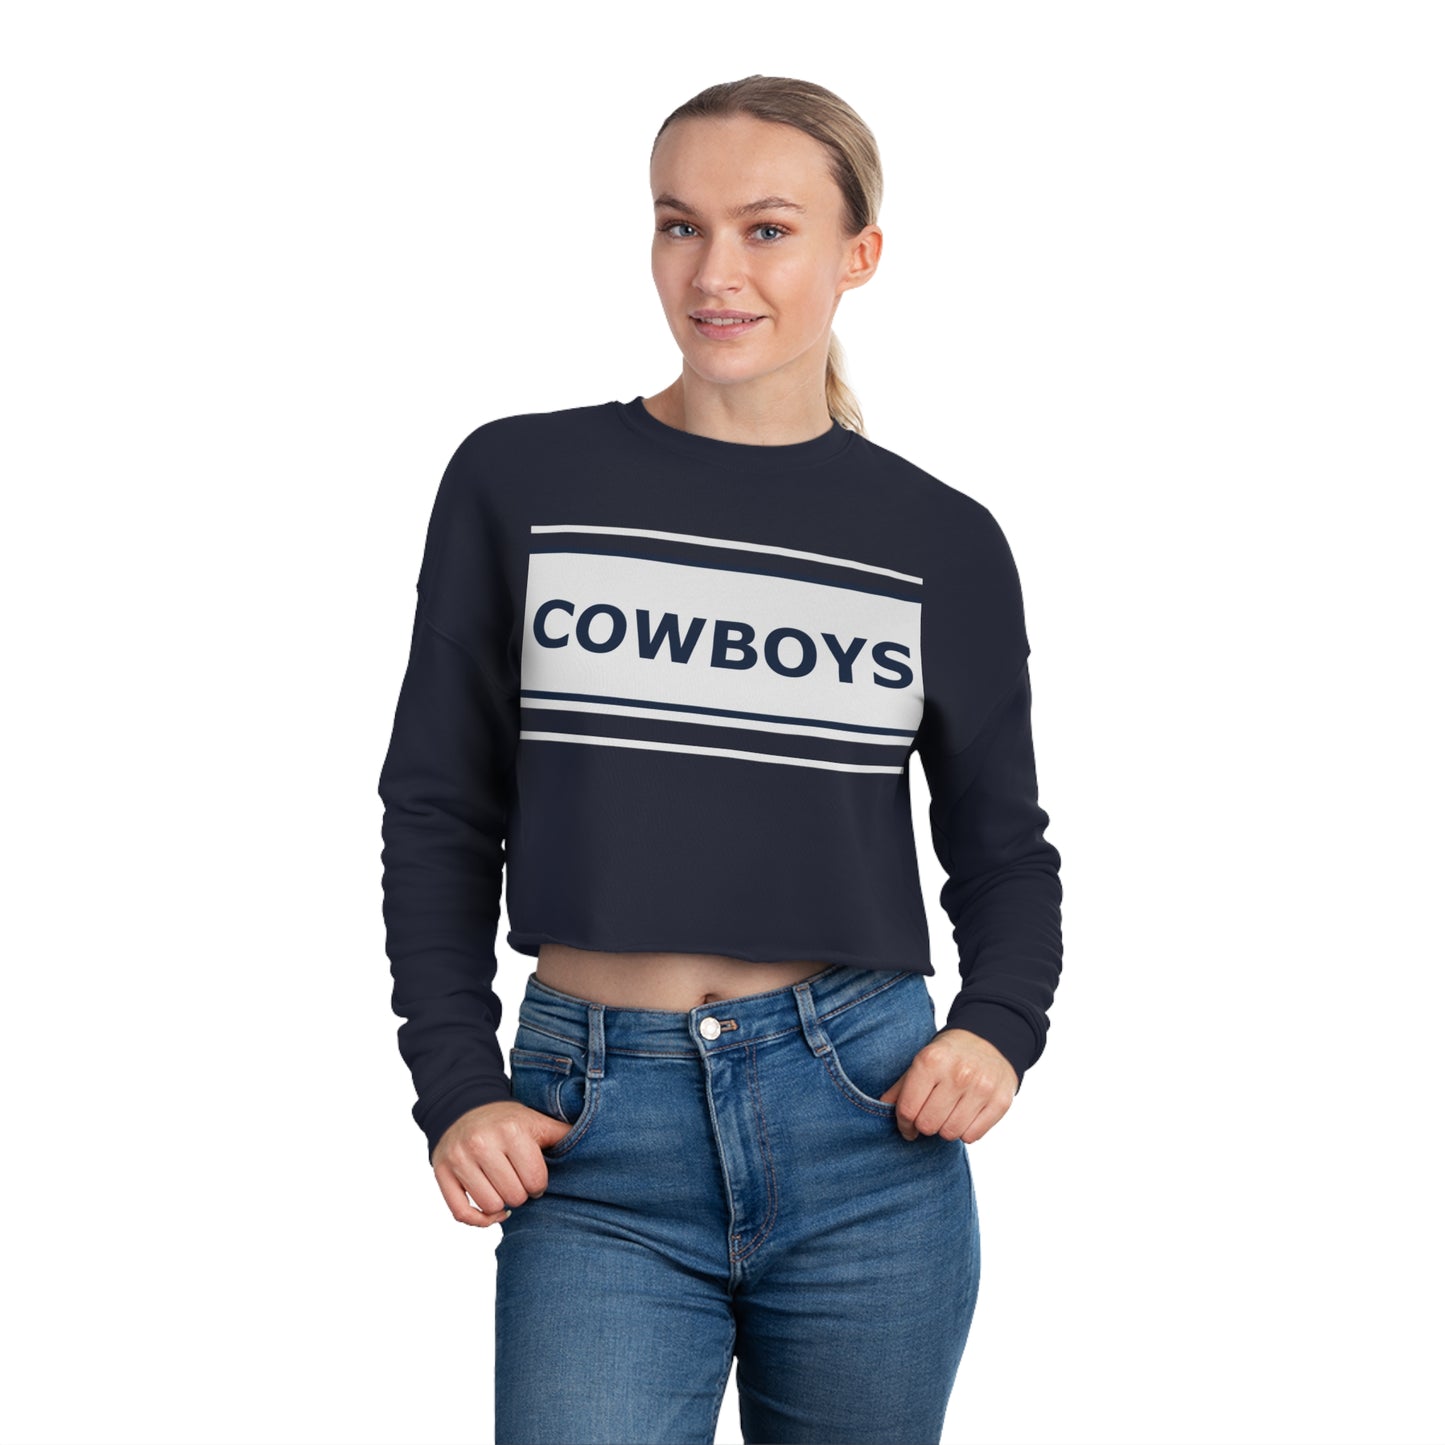 Cowboys Women's Cropped Sweatshirt